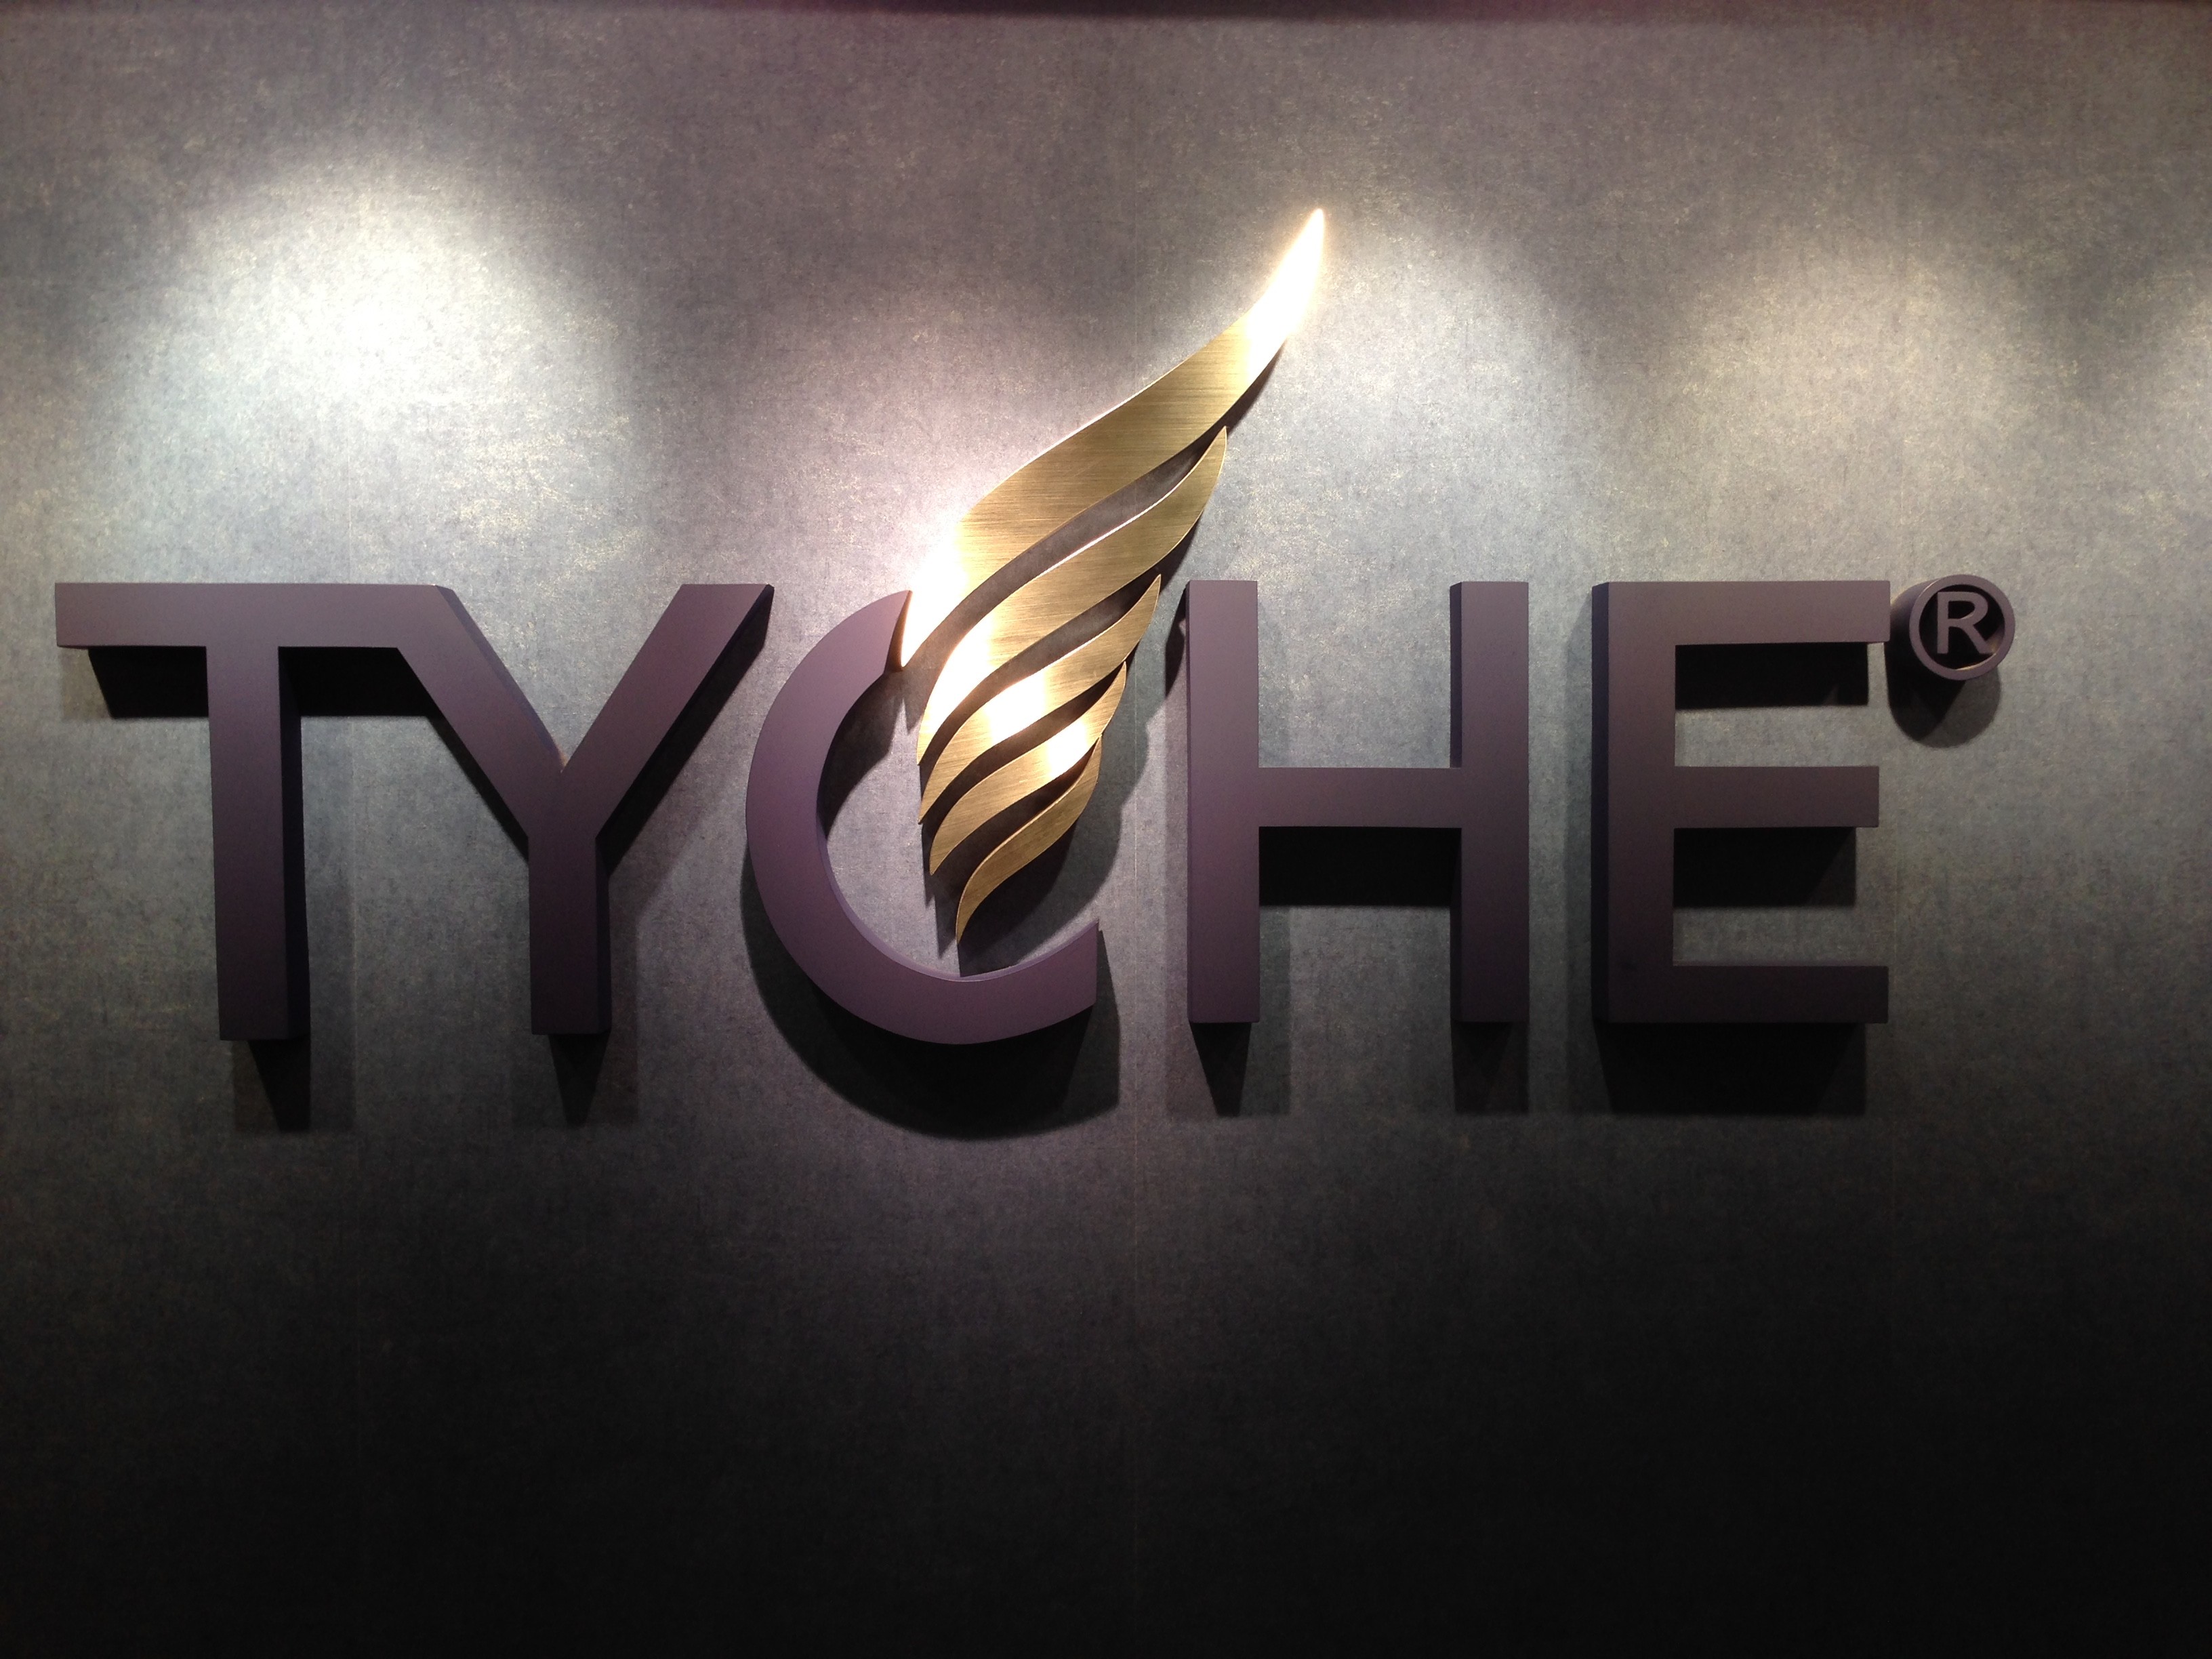 Tyche Group Ltd. | LinkedIn